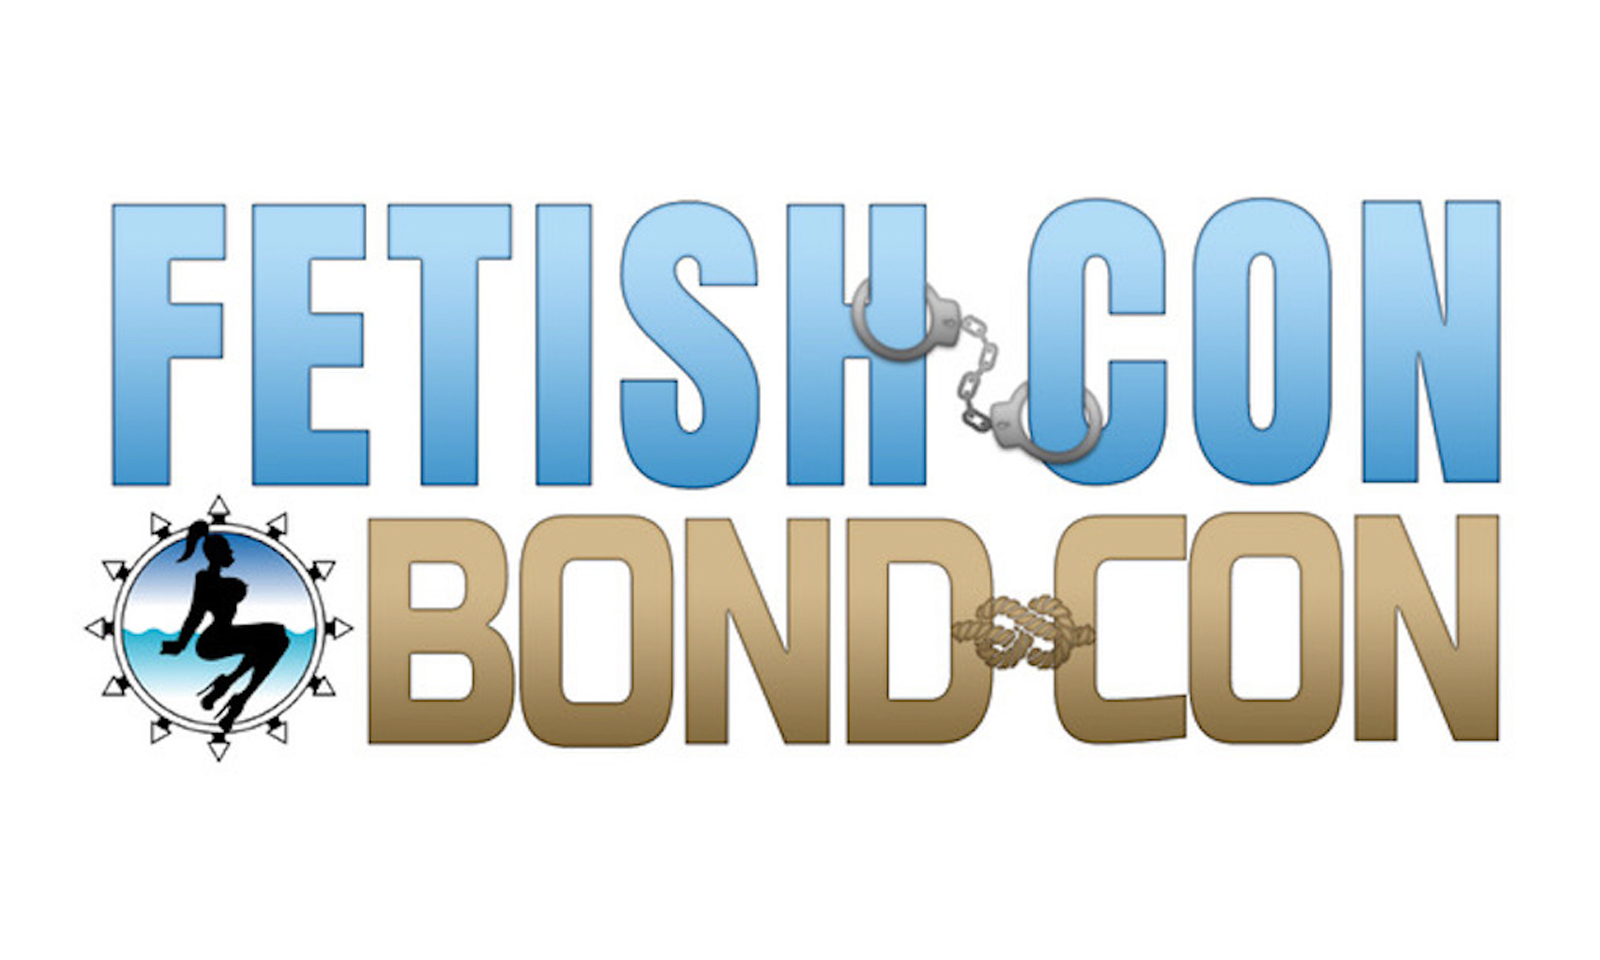 Bond Con Coming Back to Fetish Con